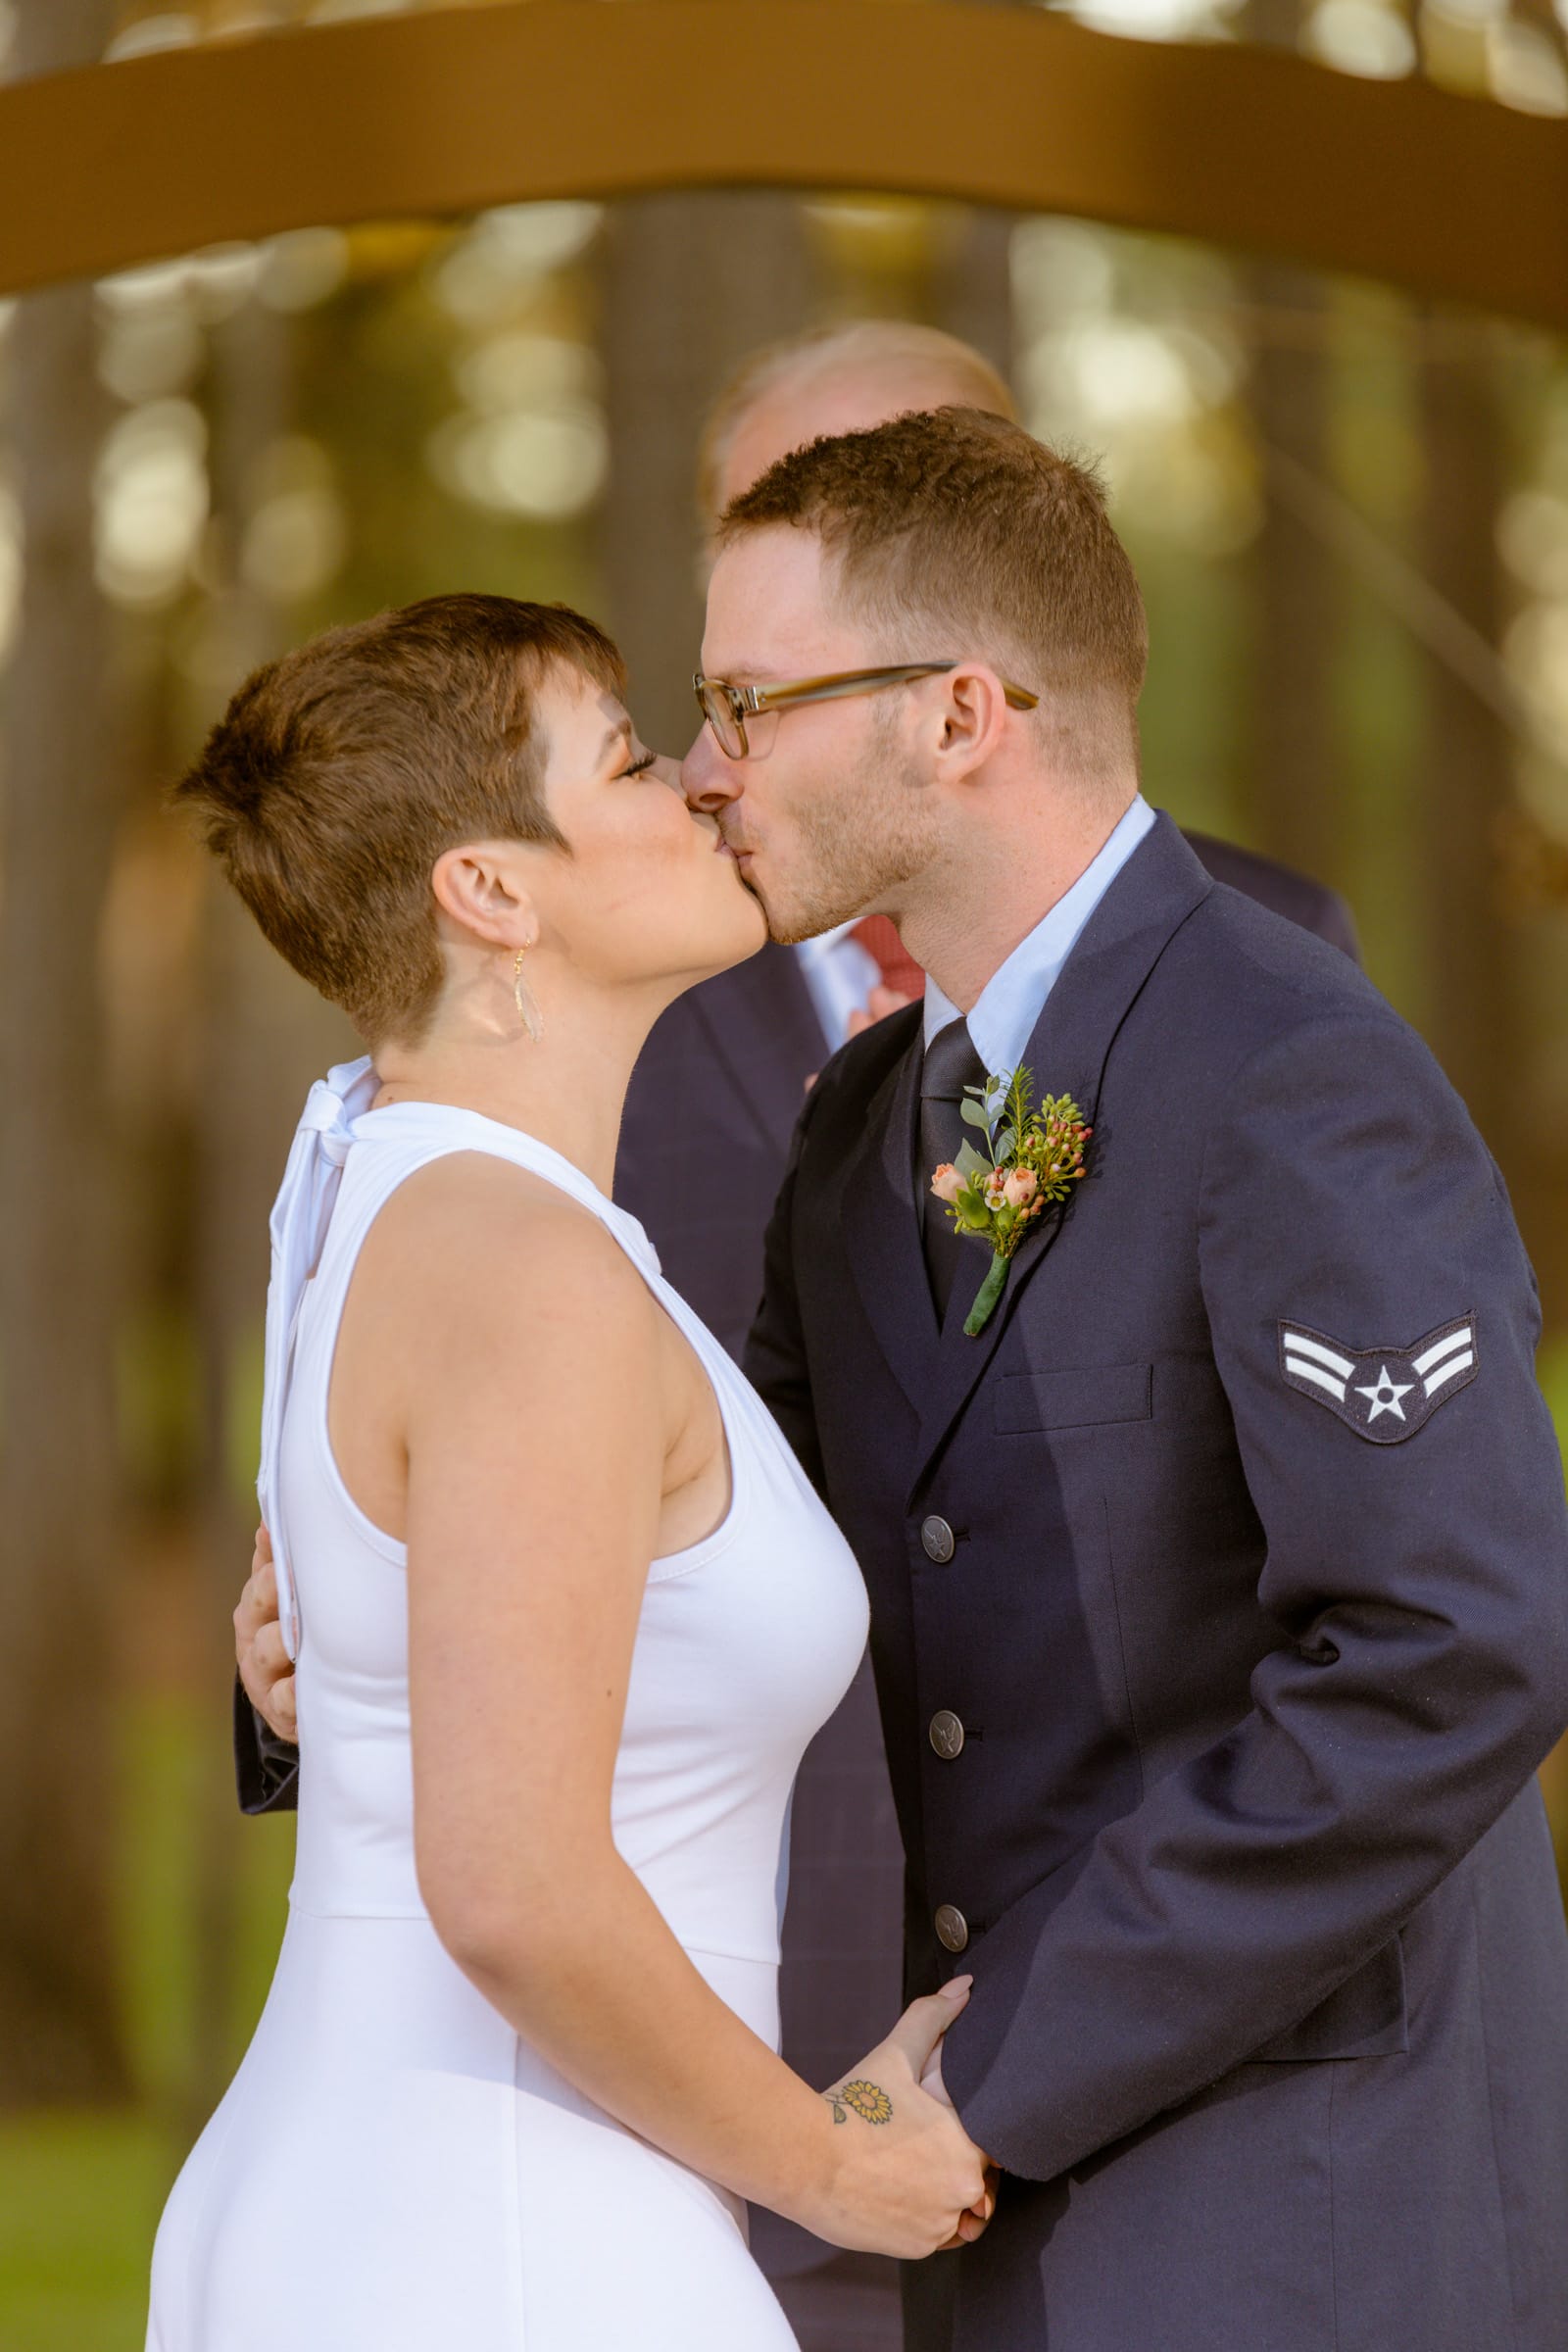 wedding kiss in outdoors, spring texas, military groom, short hair bride